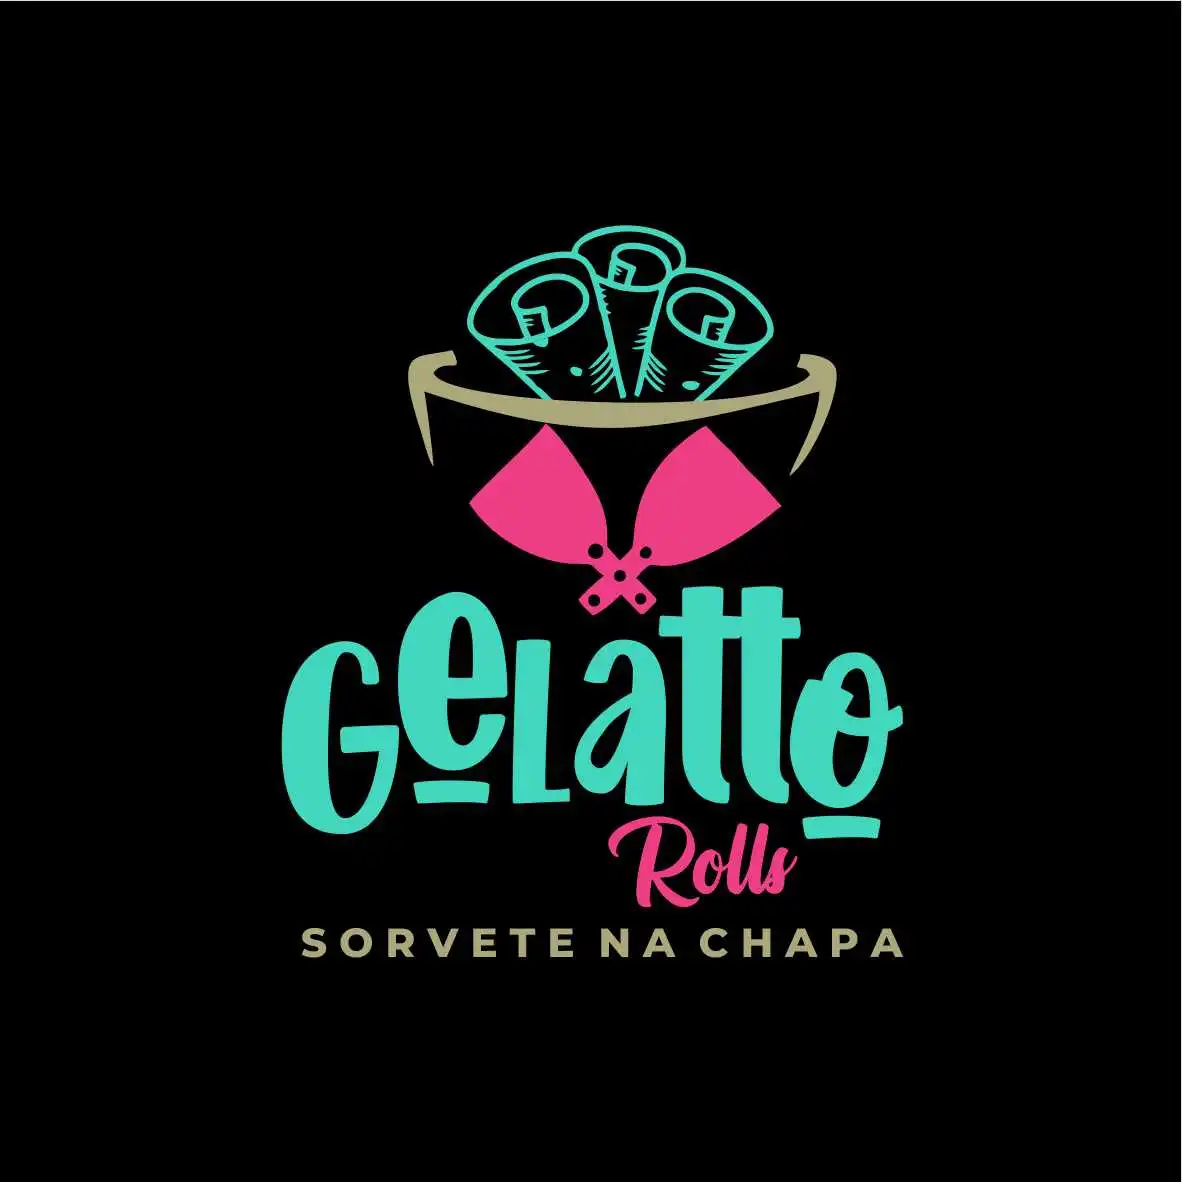 
Logotipo Logomarca Sorvete na Chapa



